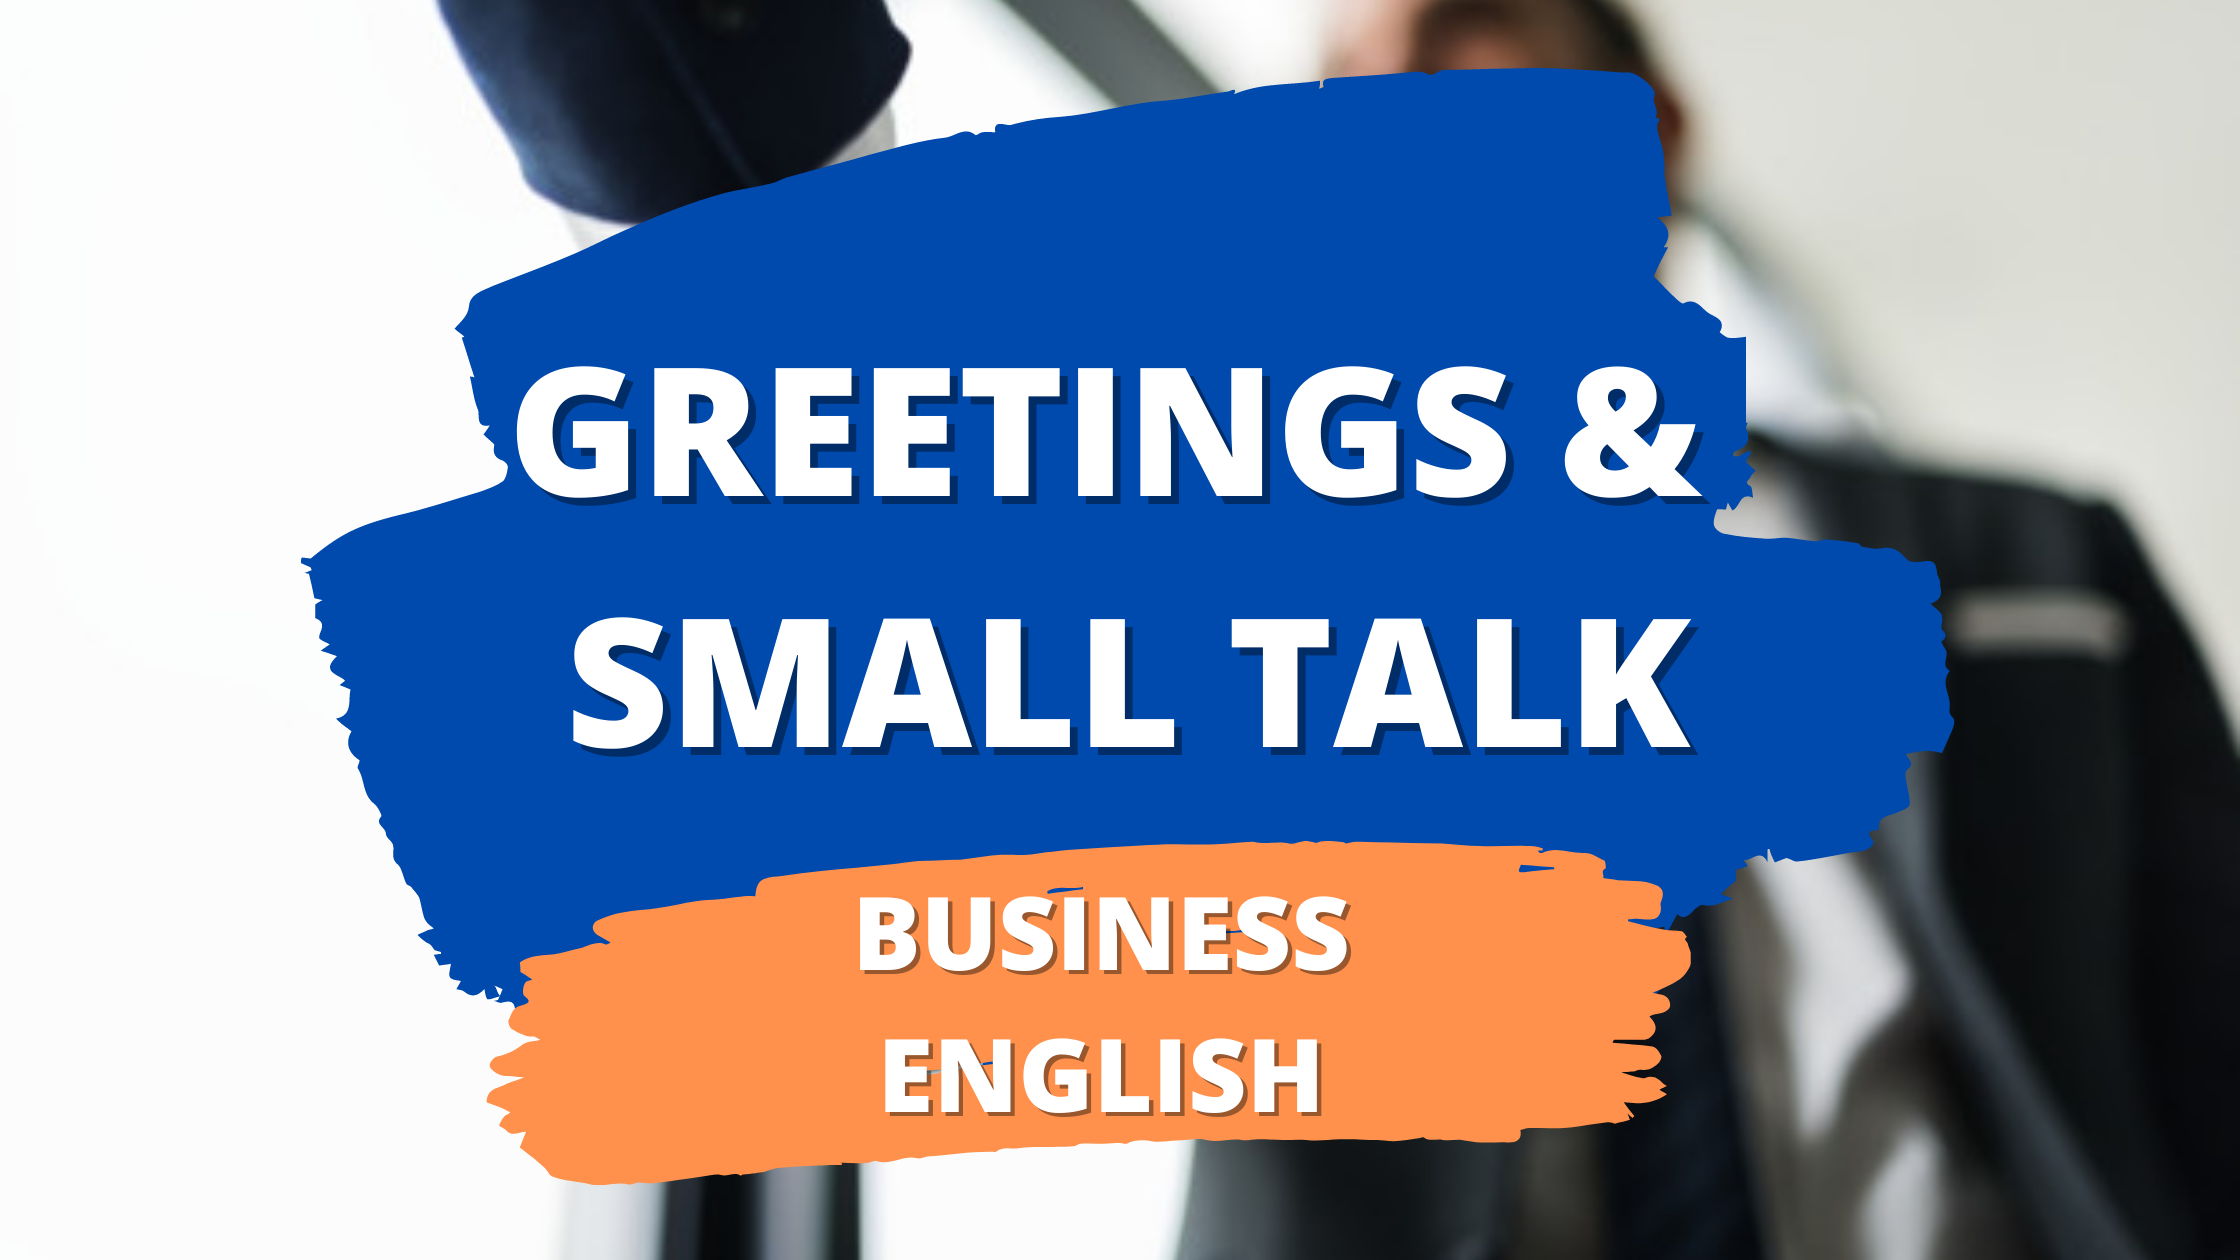 Greetings & Small Talk